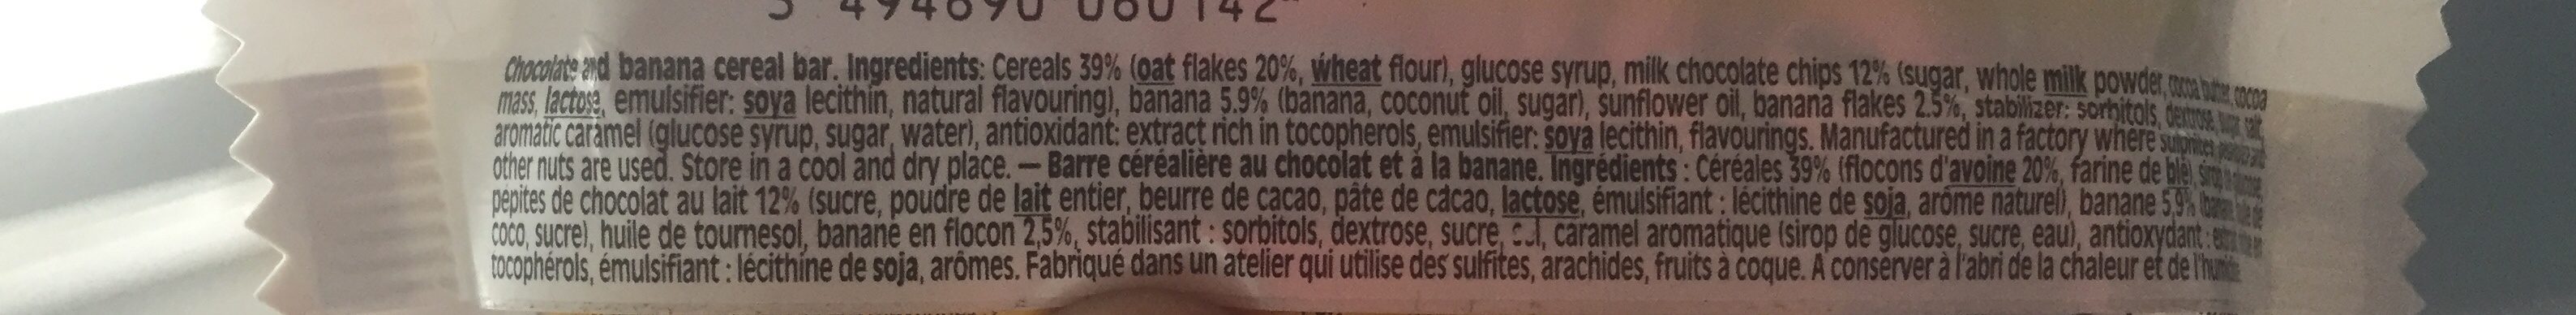 Céréal bar Chocolate banana - Ingredientes - fr